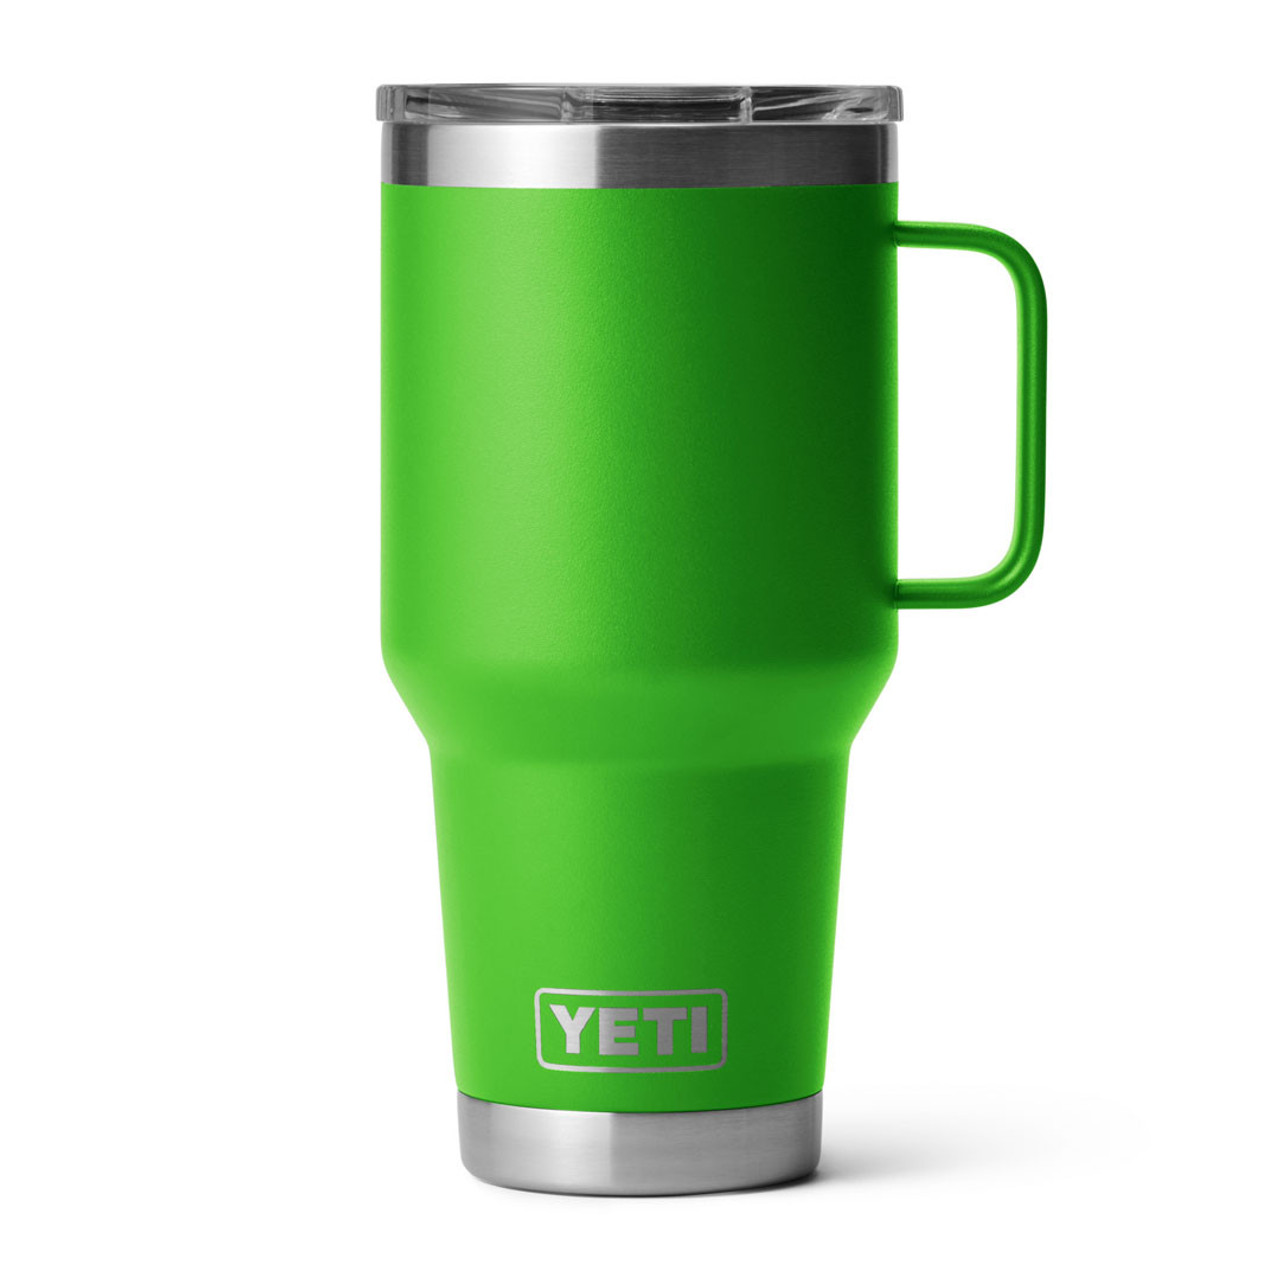 Yeti Rambler Tumbler Review - Is it the Best Yeti Coffee Travel